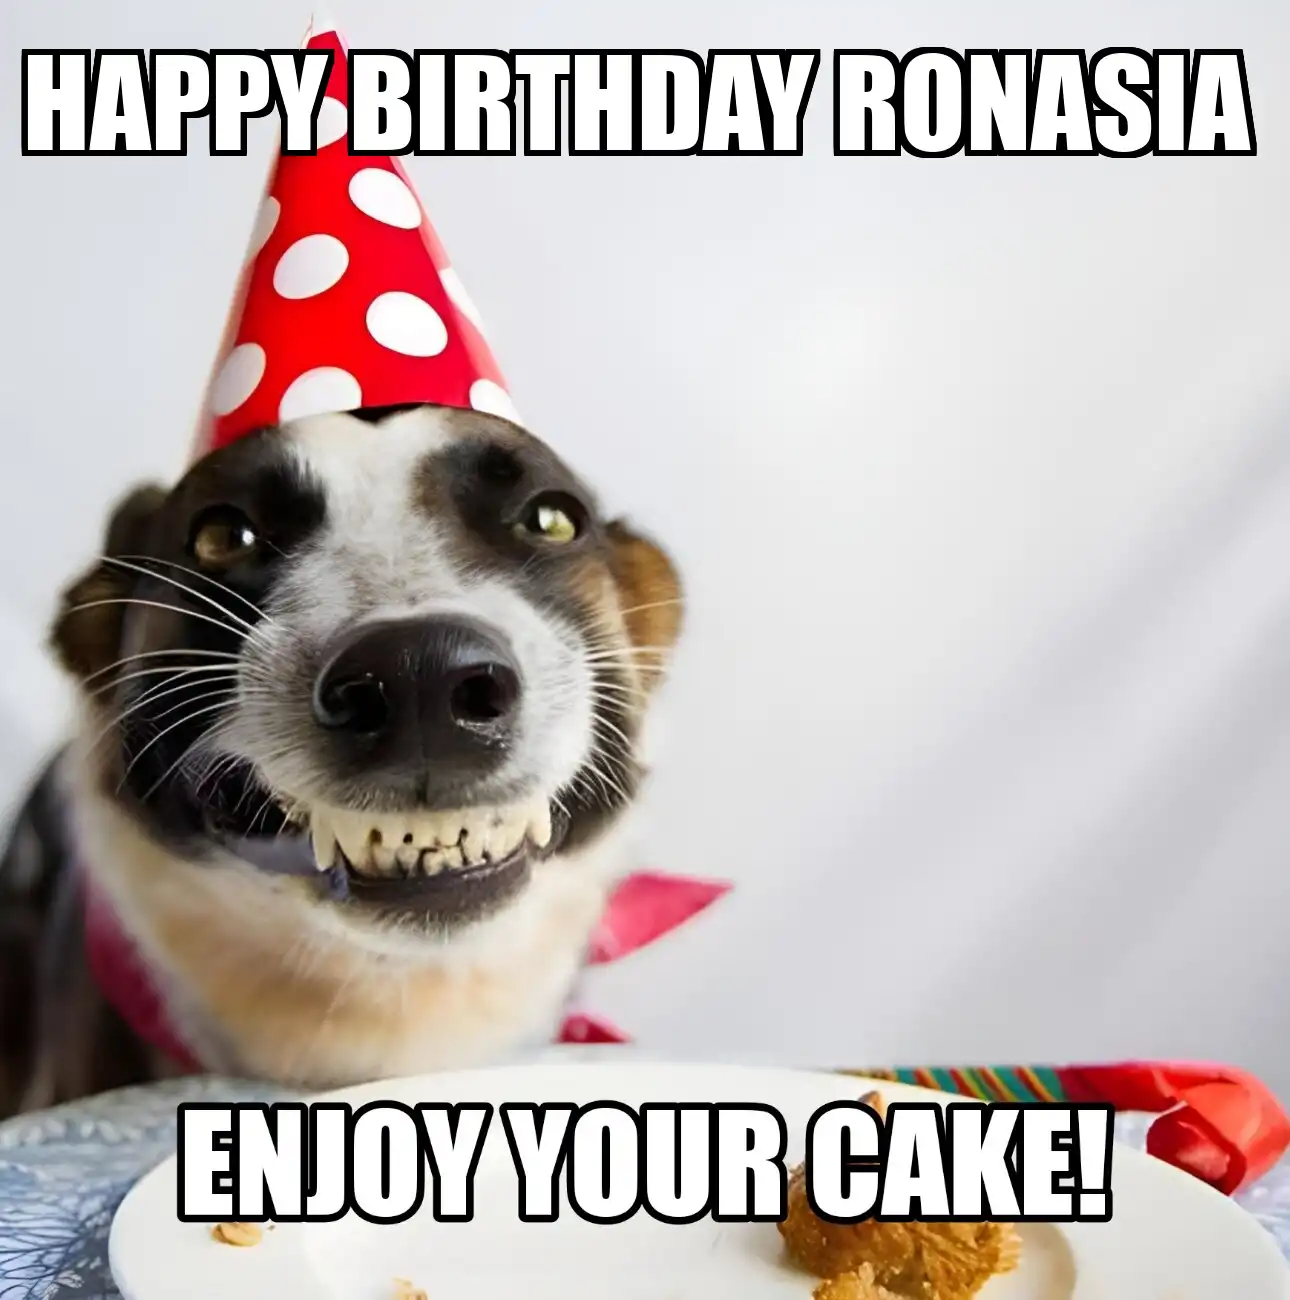 Happy Birthday Ronasia Enjoy Your Cake Dog Meme